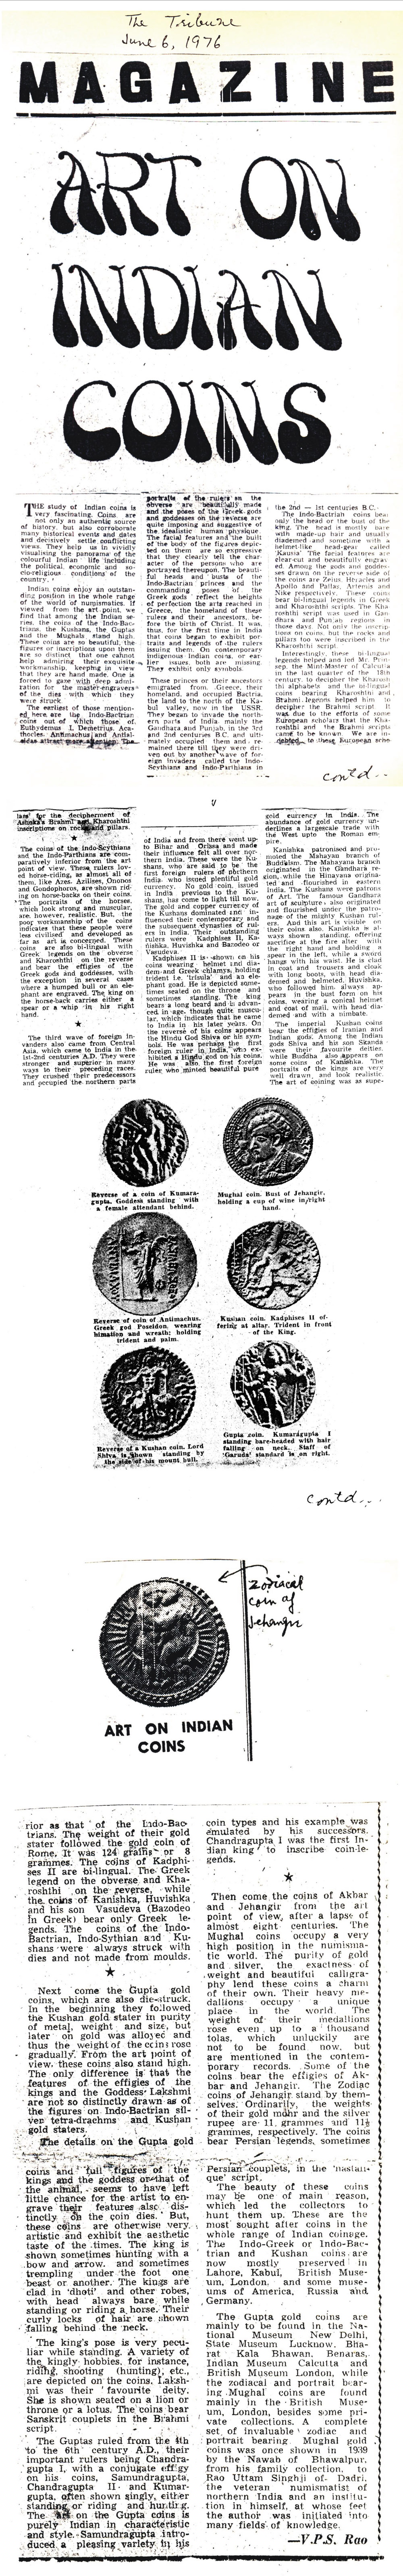 51. Sri VPS Rao on Art on Indian Coins1